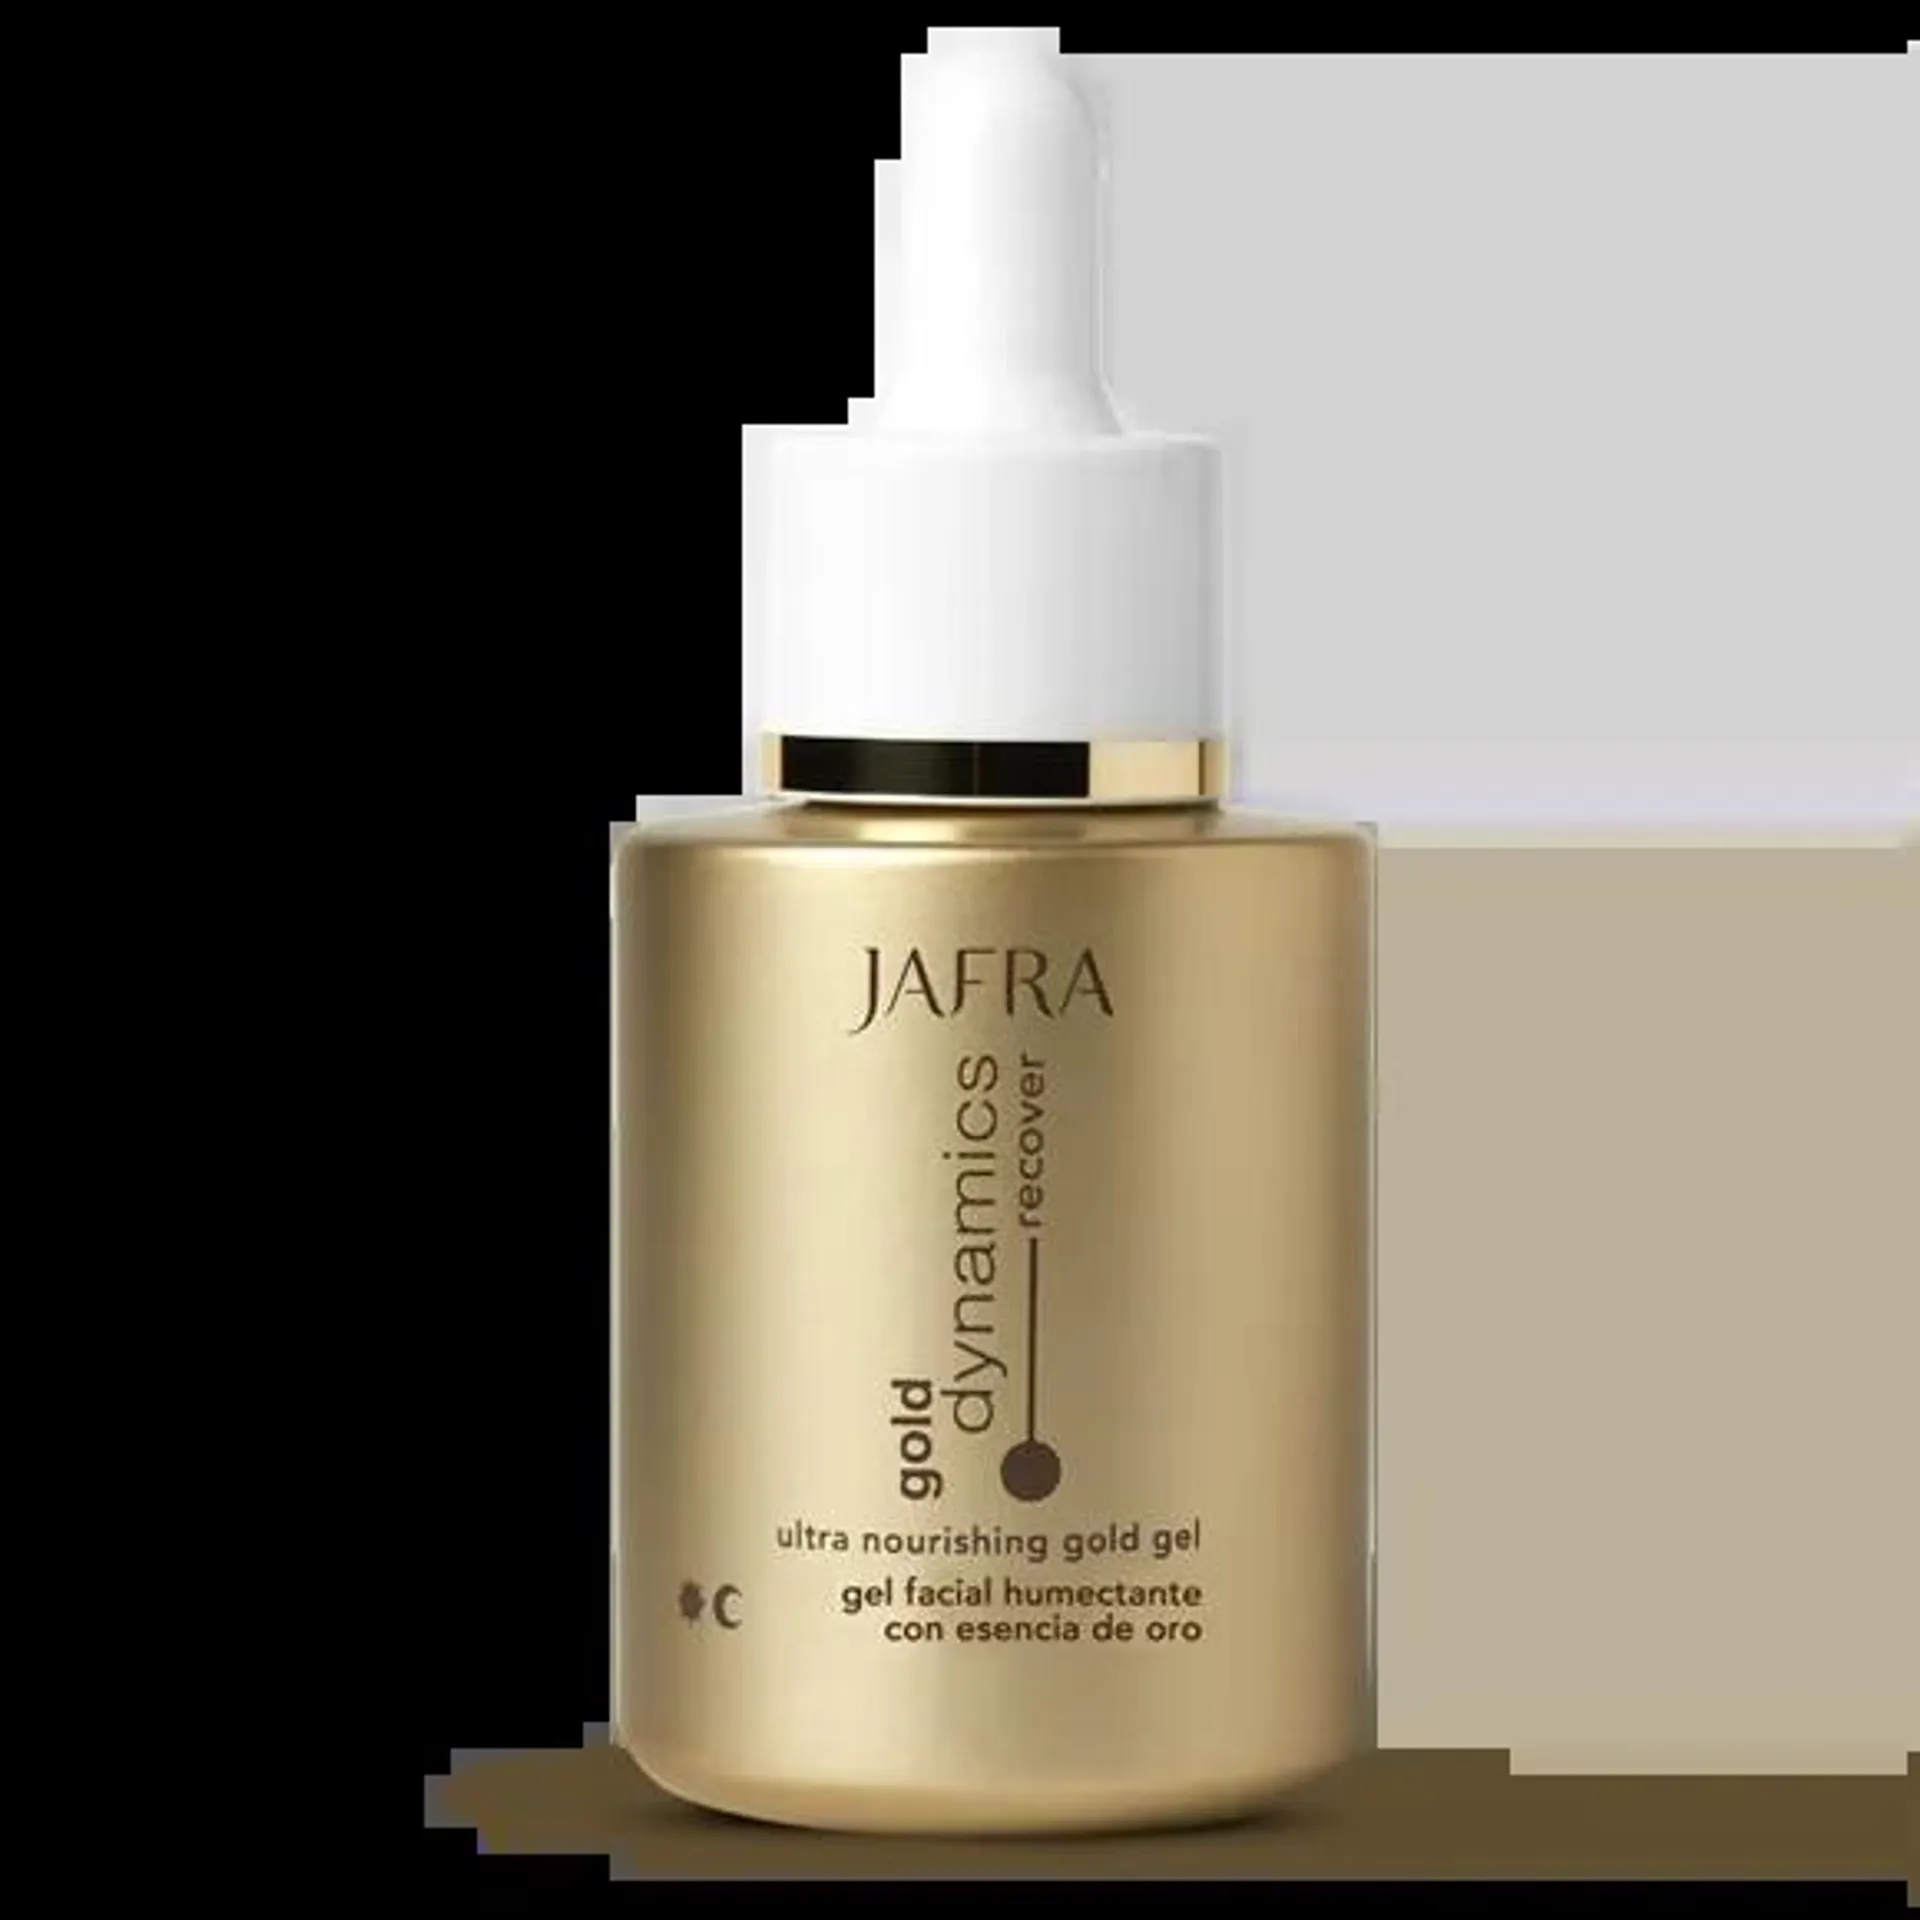 JAFRA Gold Dynamics Gel Facial Humectante con Esencia de Oro